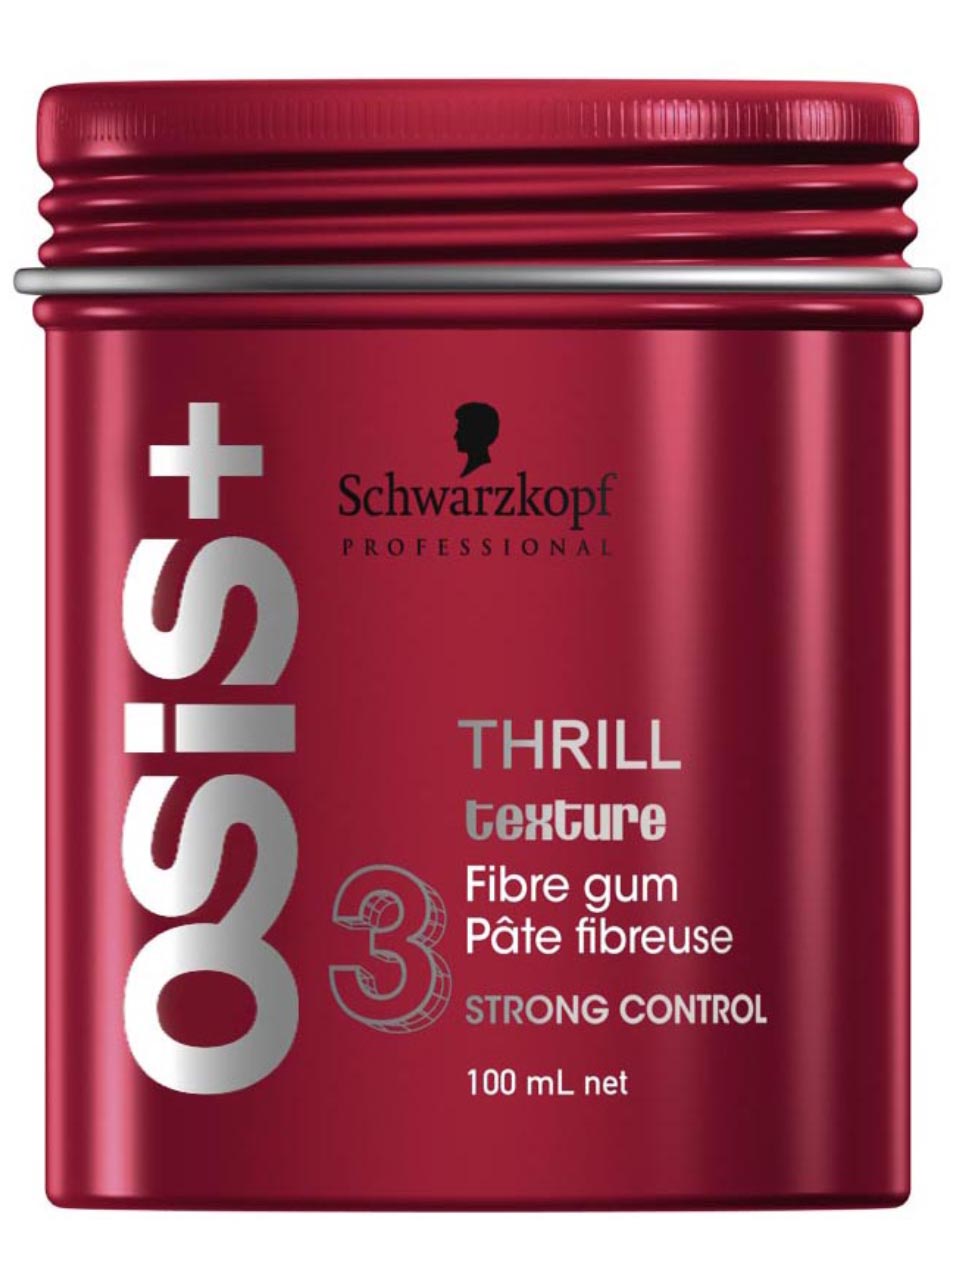 Schwarzkopf Osis+ Thrill  Fibre Gum - Cream with Fiber Shine Texture gum null - onesize - 1